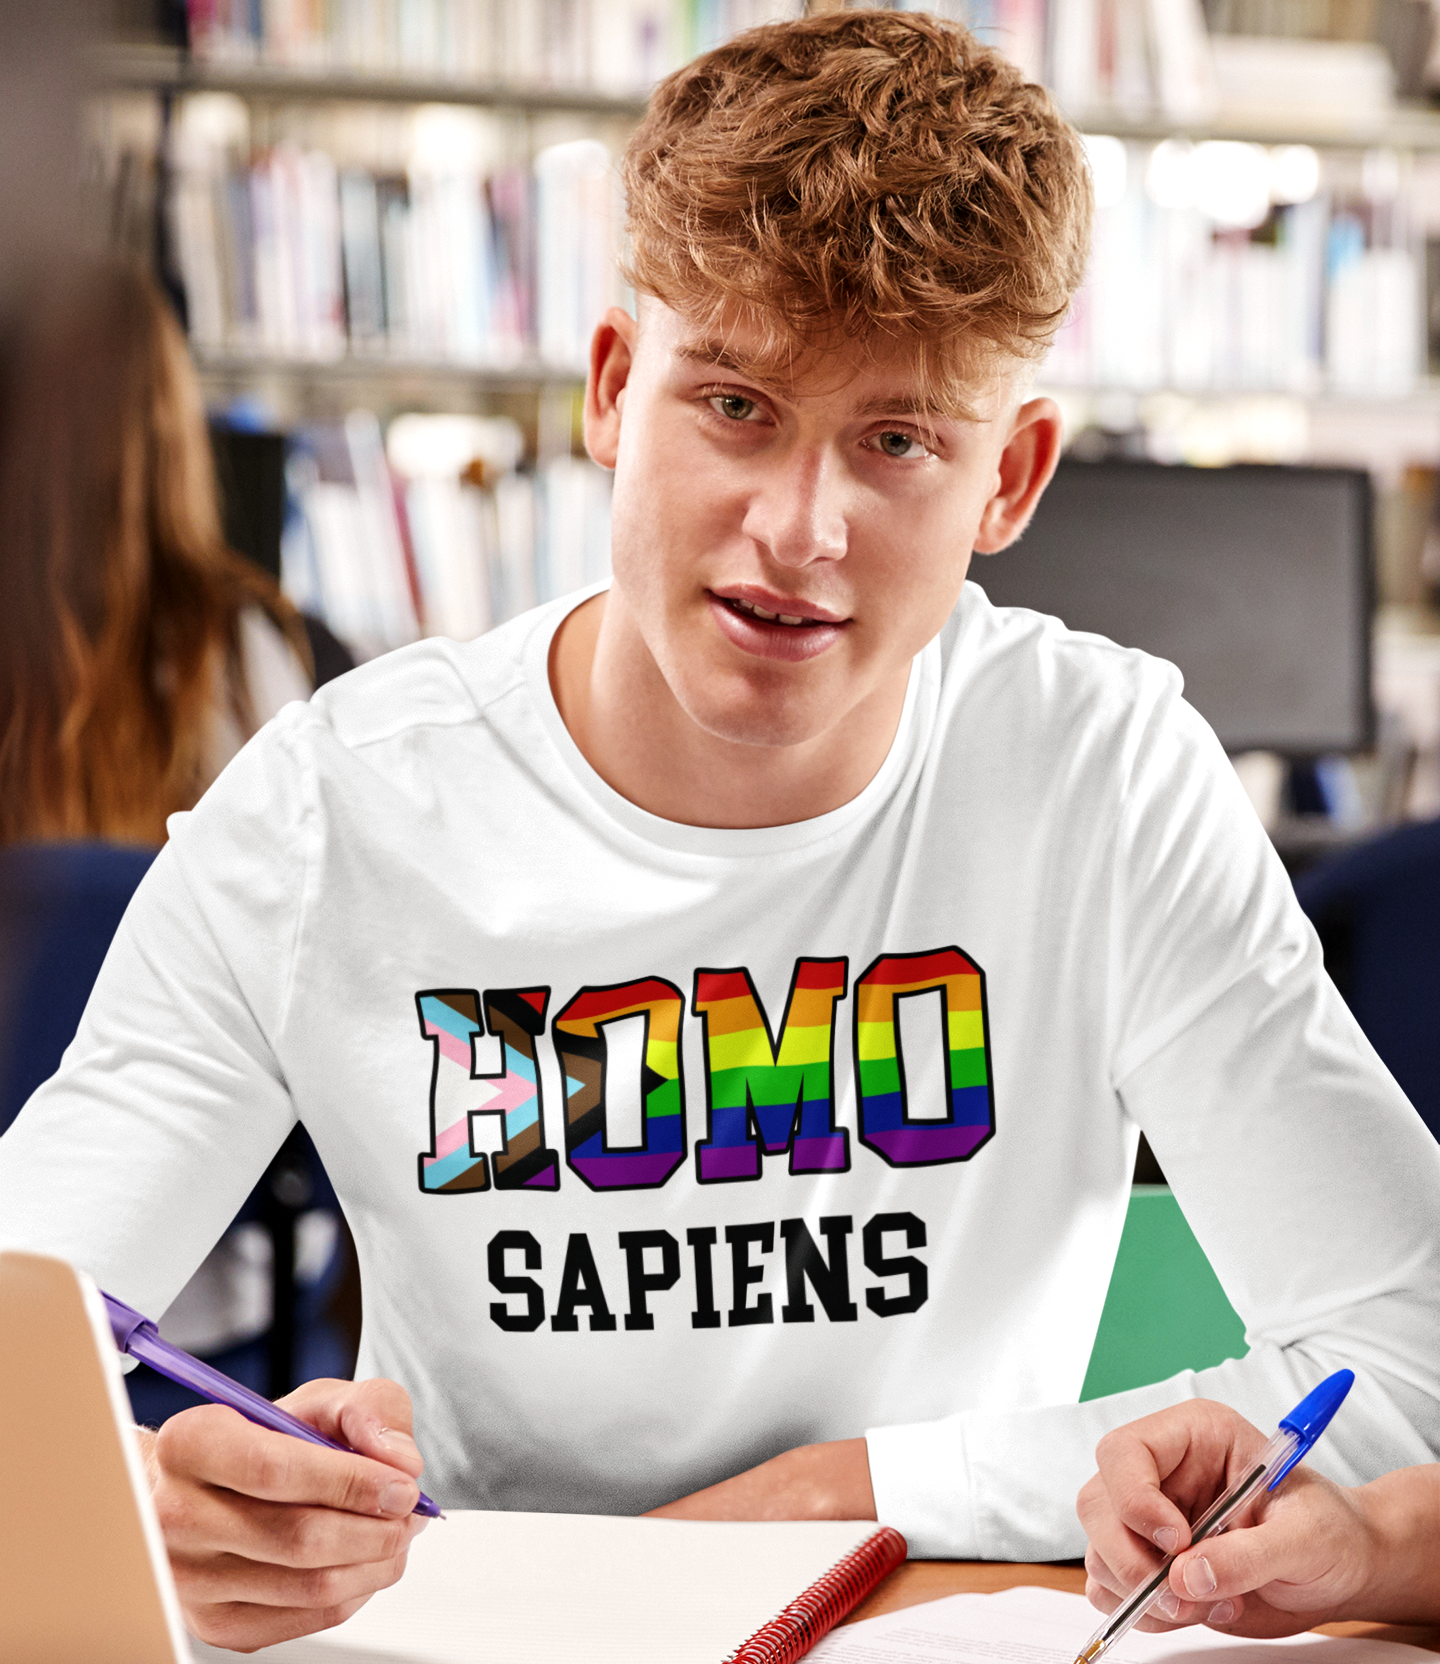 Camiseta de manga larga para adulto HOMO SAPIENS